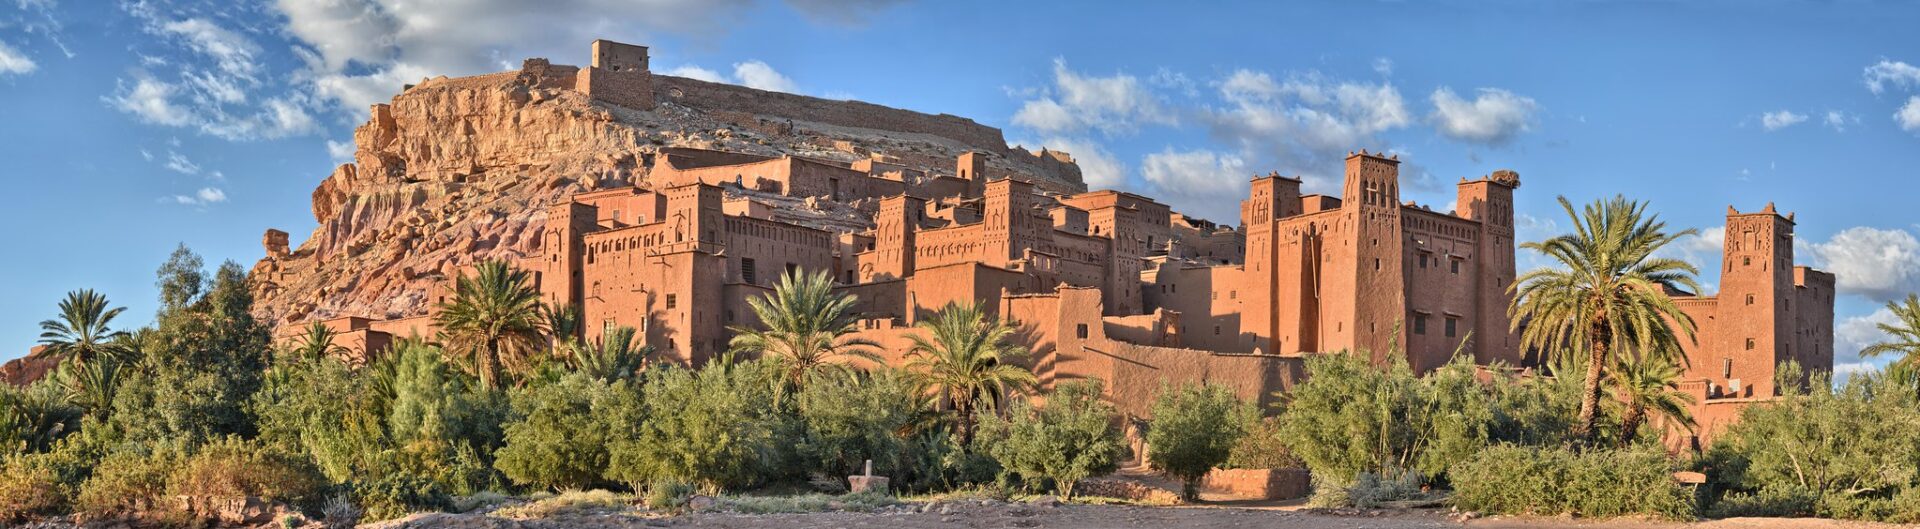 day trip to ouarzazate from marrakech- Marrakech – Ait Benhaddou – Ouarzazate 1 Day tour